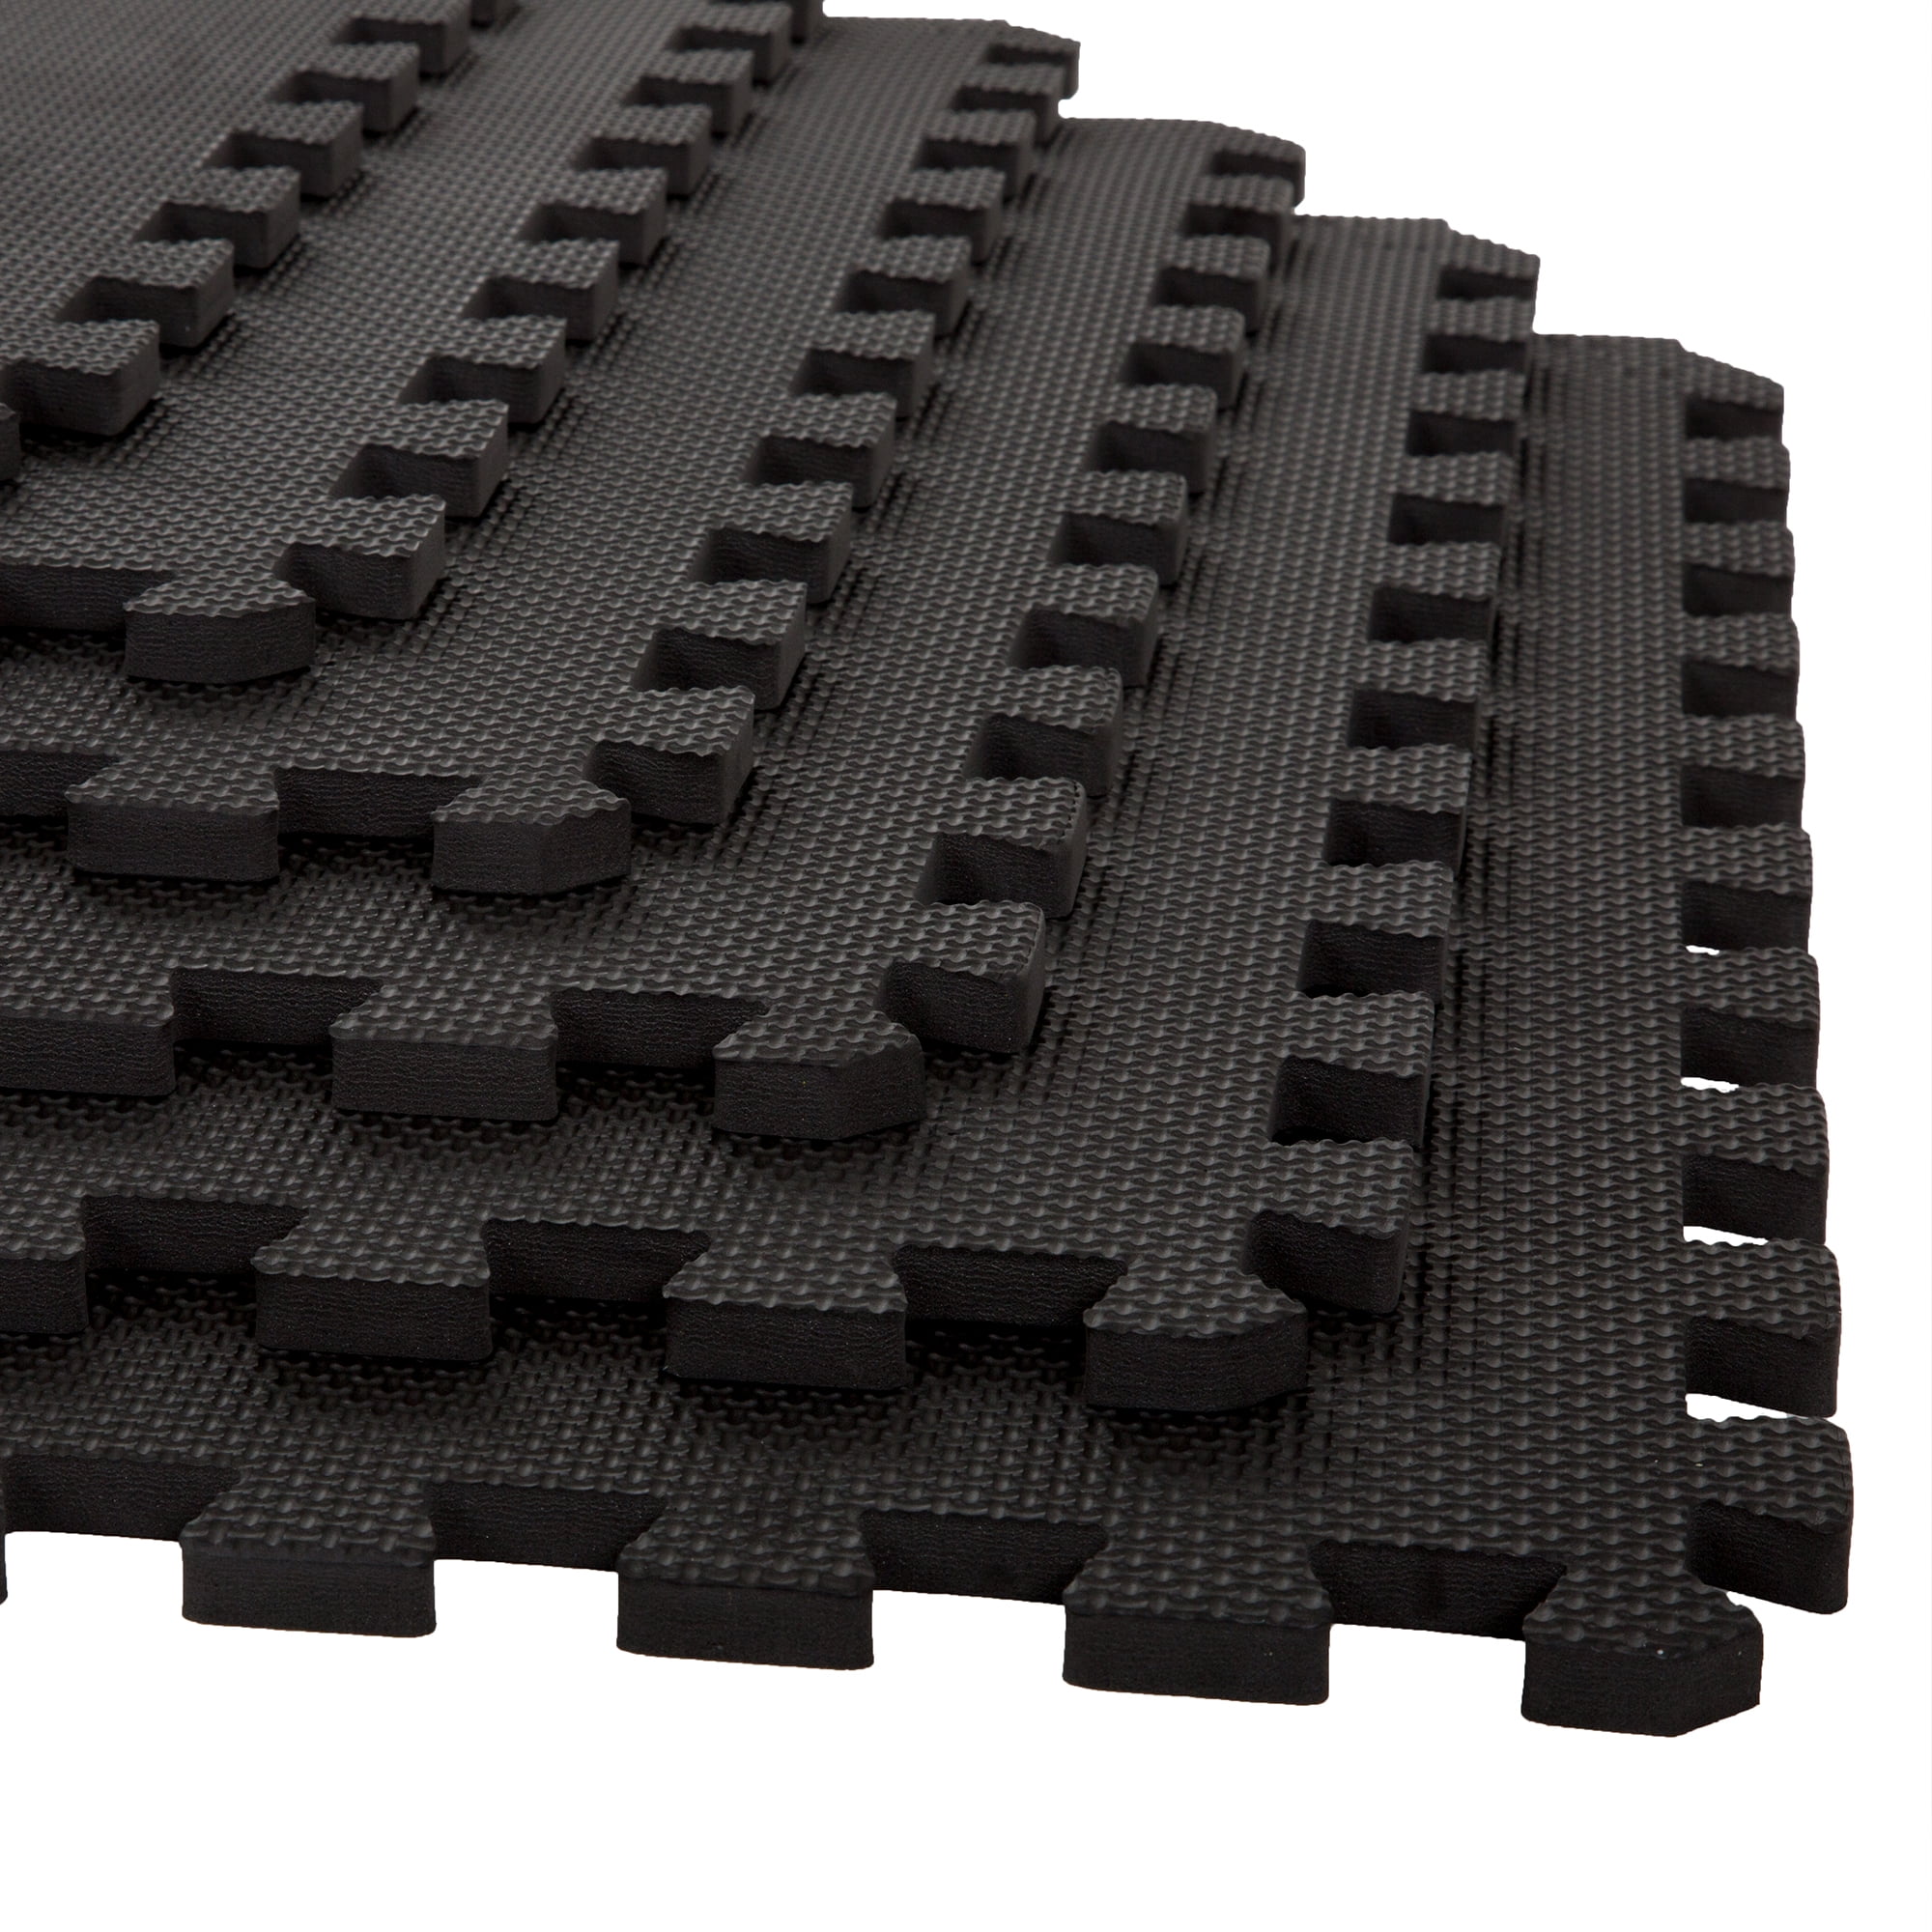 Stalwart Interlocking EVA Foam Floor Tiles for Home Gym, Yoga Mat, Workout  Equipment, or Child's Play Surface – Set of 6, (Black)